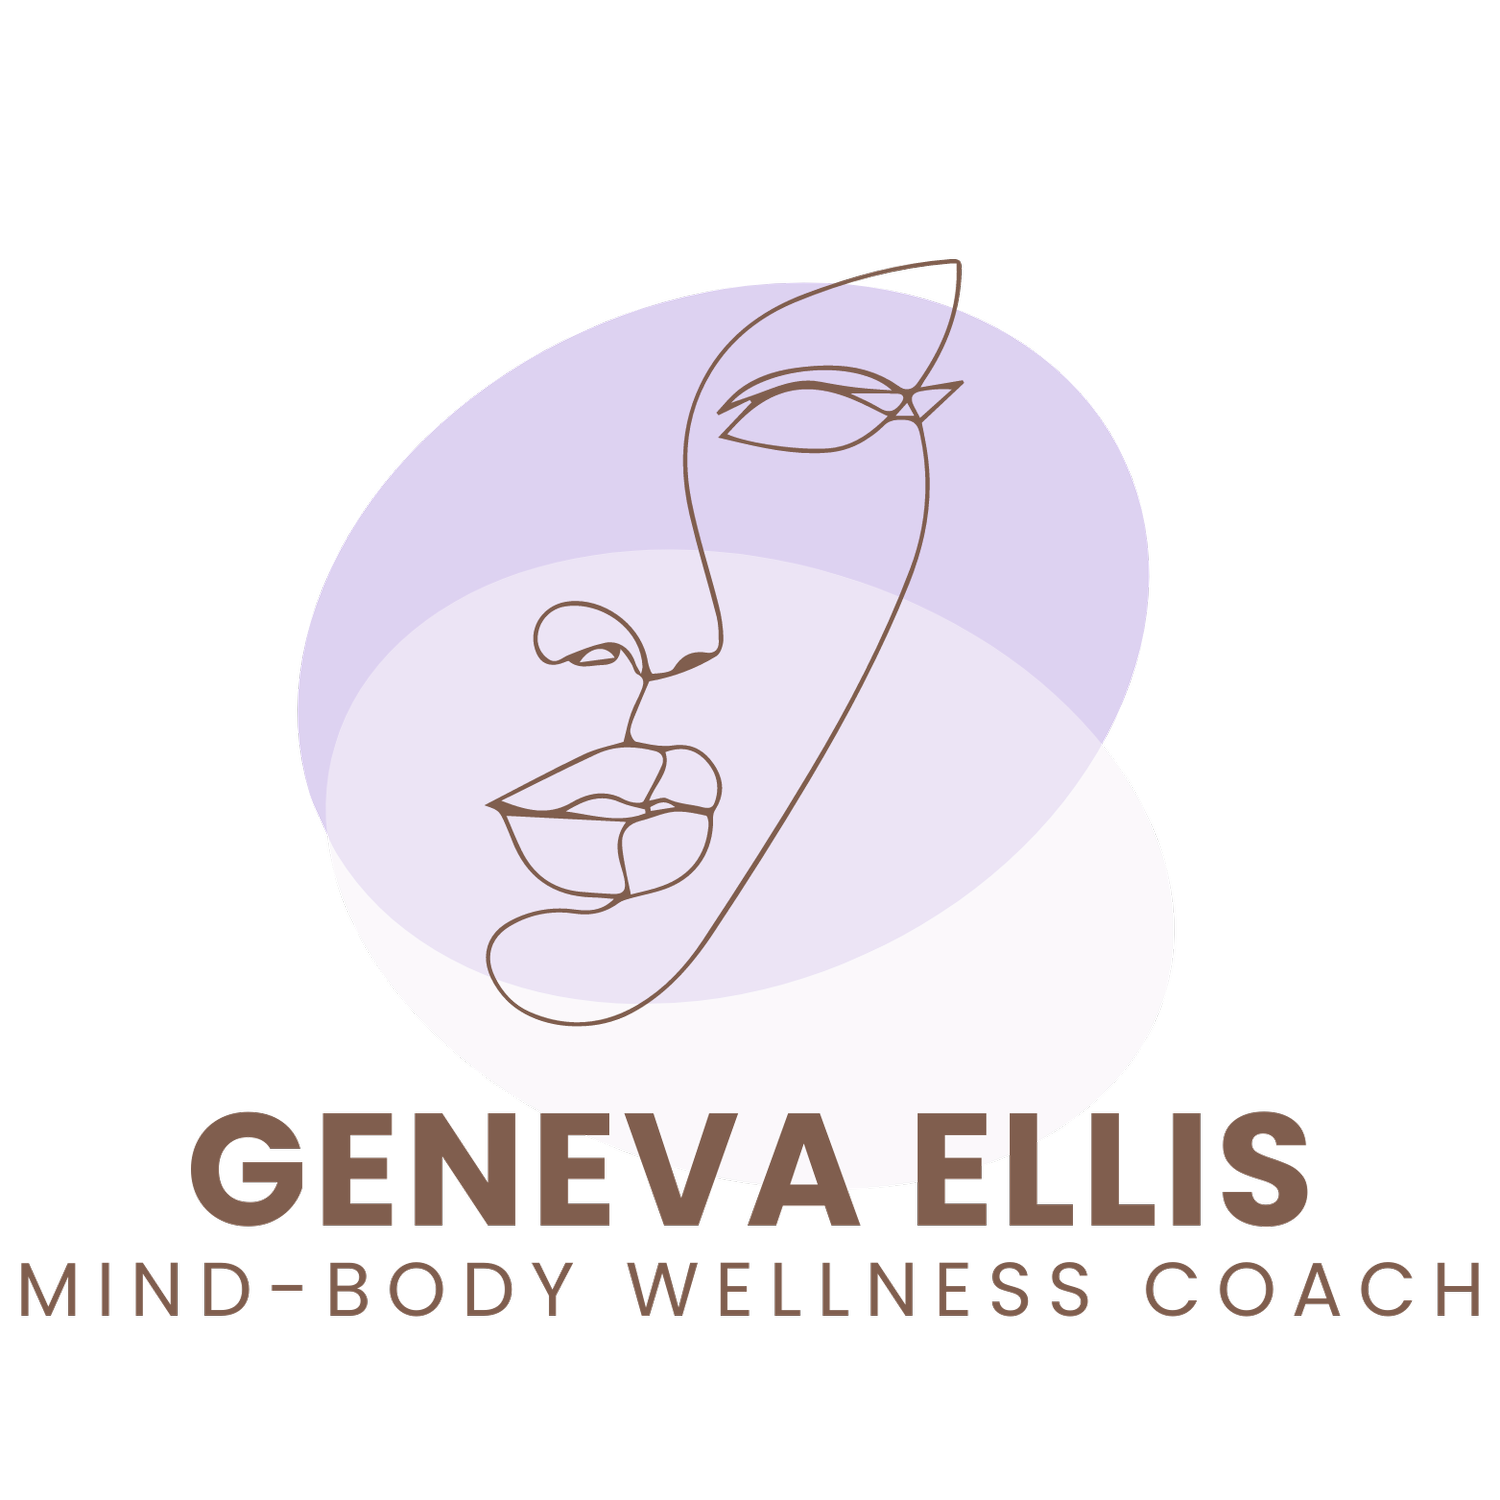 Geneva Ellis, Mind-Body Wellness Coach